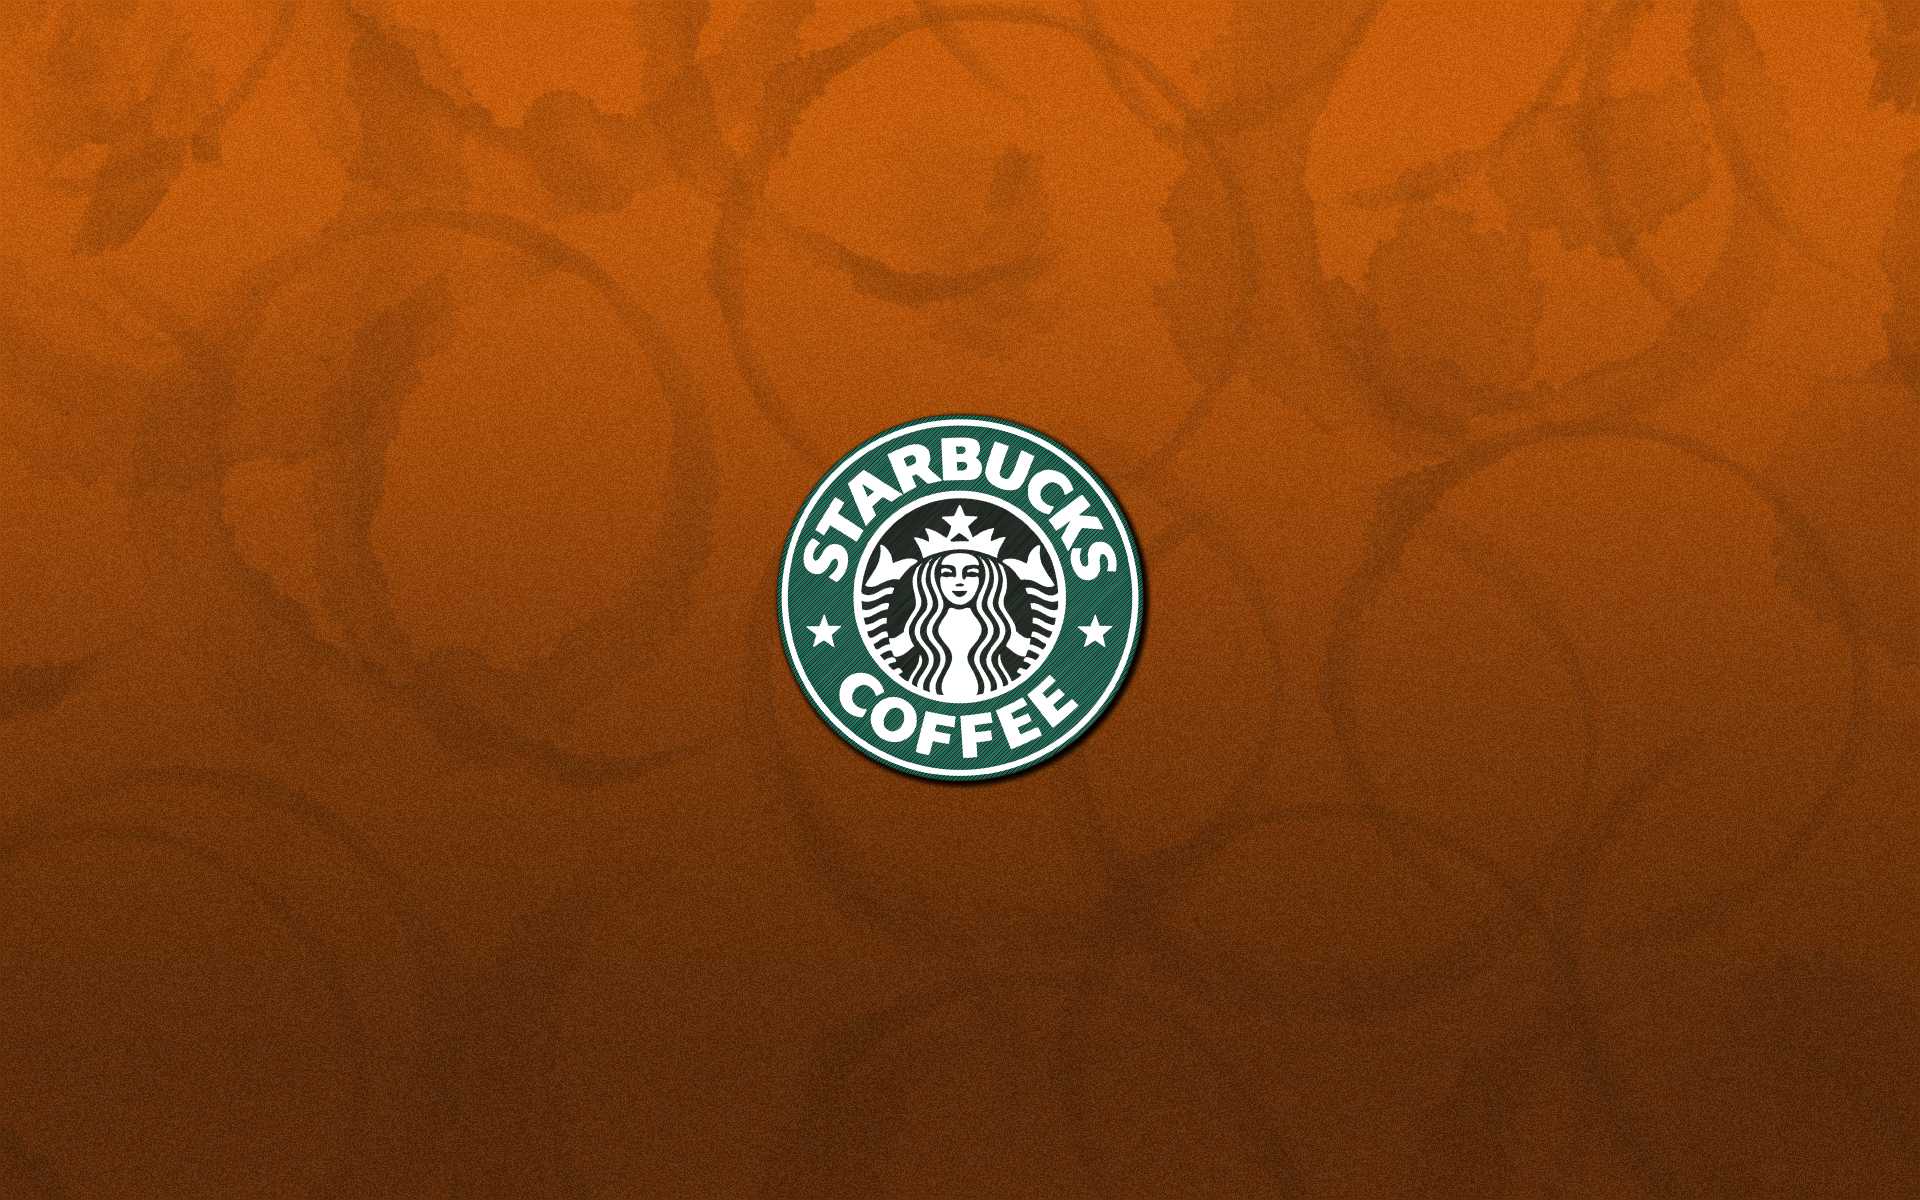 Starbucks Clipart Backgrounds For Powerpoint Templates – Ppt Regarding Starbucks Powerpoint Template